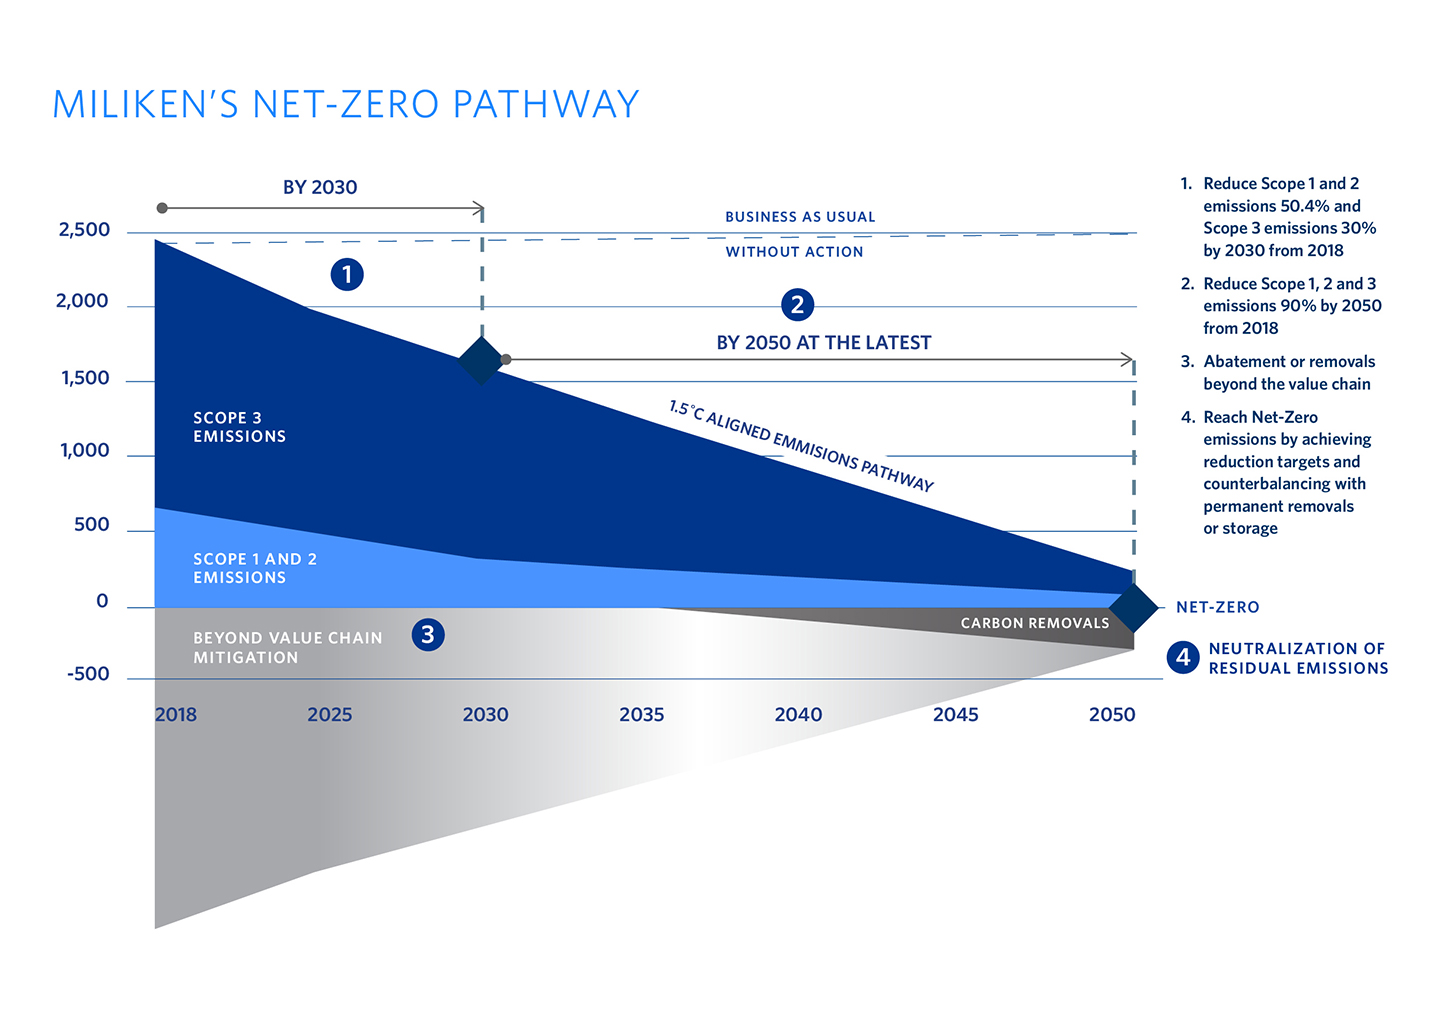 Net Zero Pathway